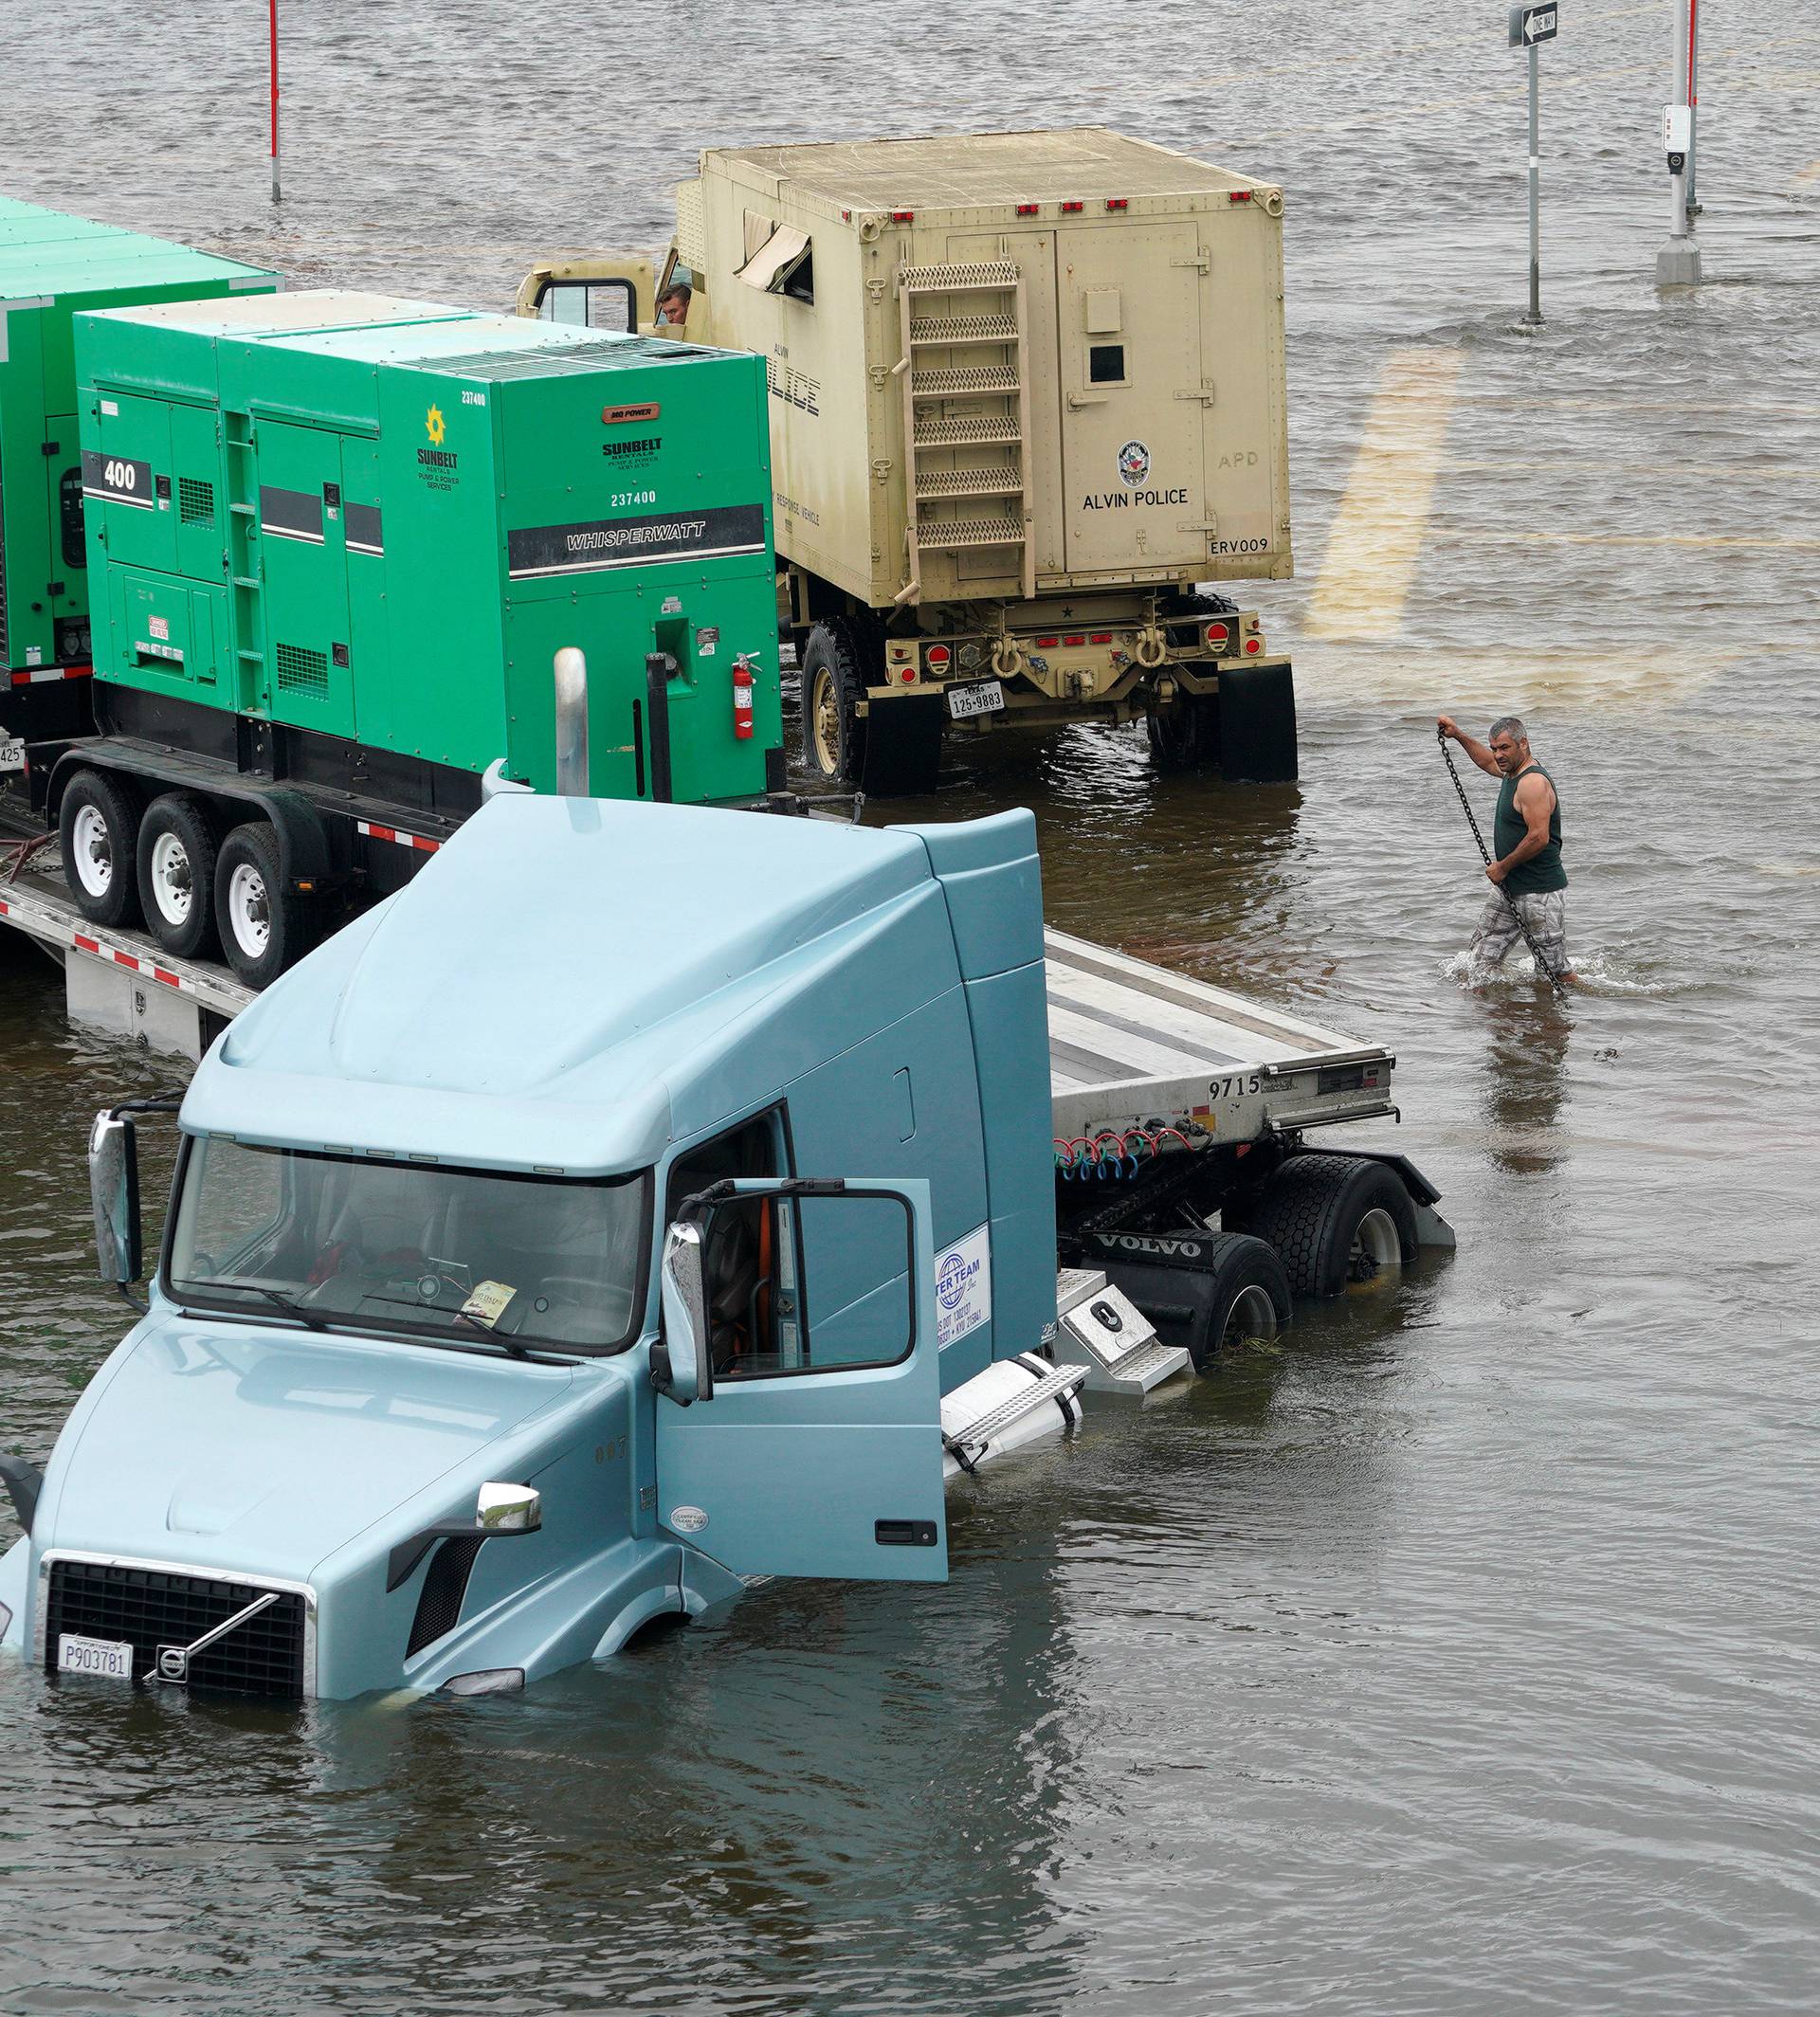 A truck carrying generators is stuck in Hurricane Harvey floodwaters near Alvin